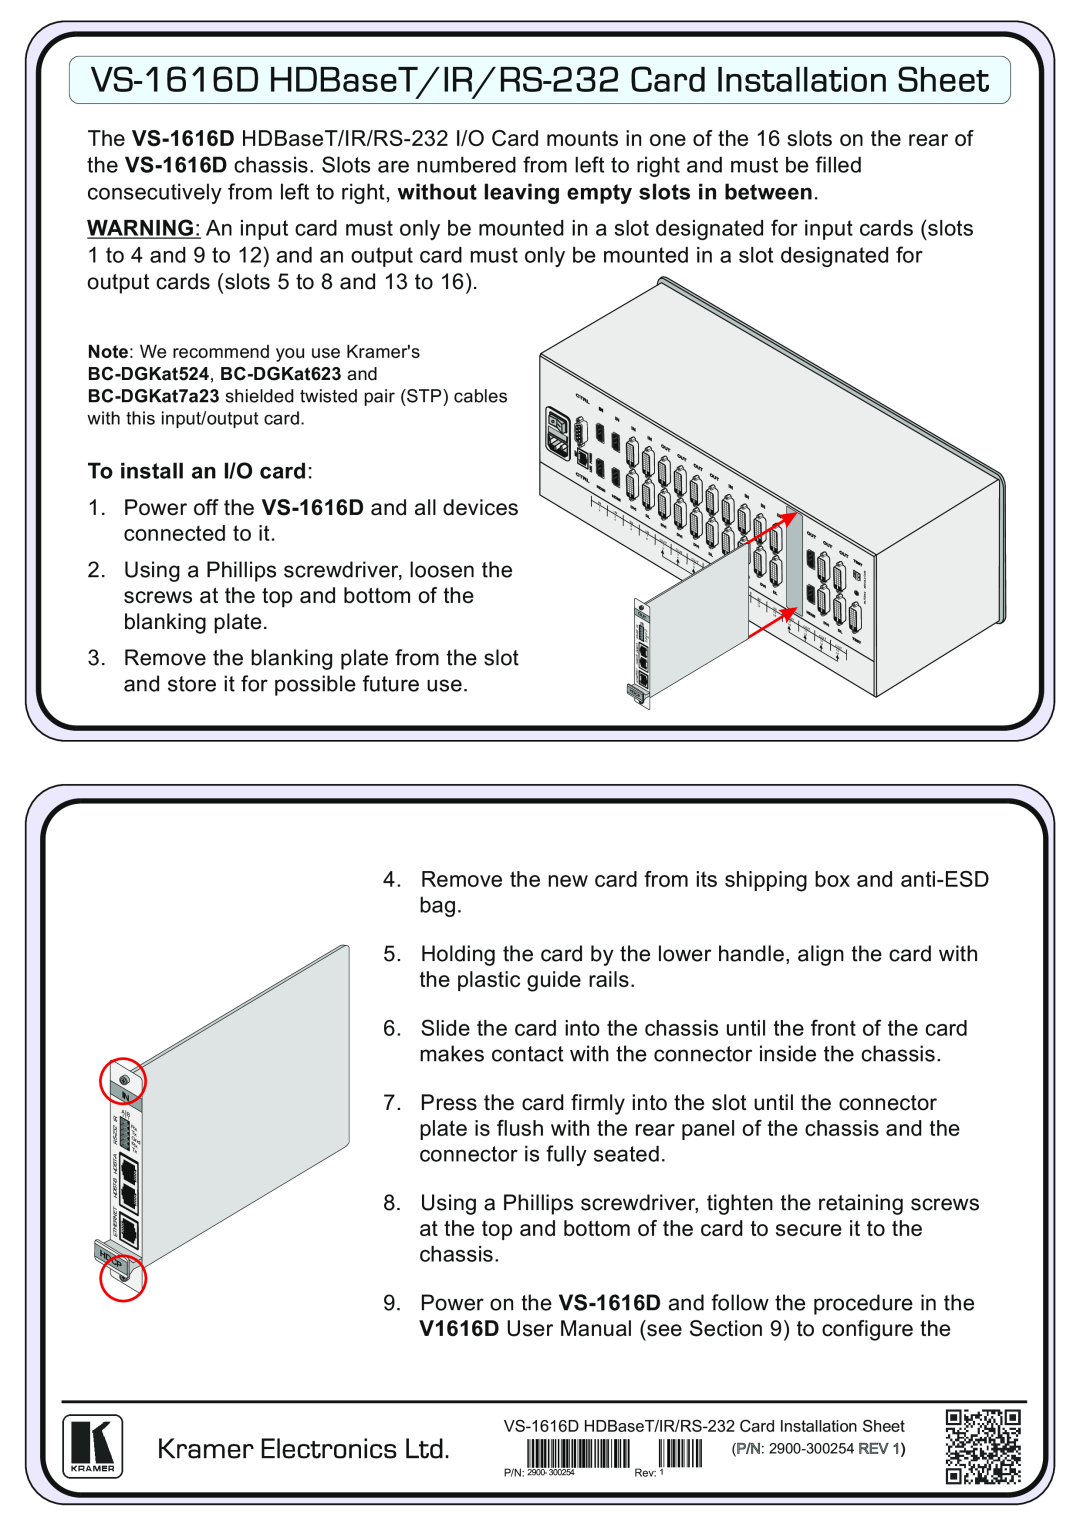 Kramer Electronics user manual VS-1616D HDMI I/O Card Installation Sheet 